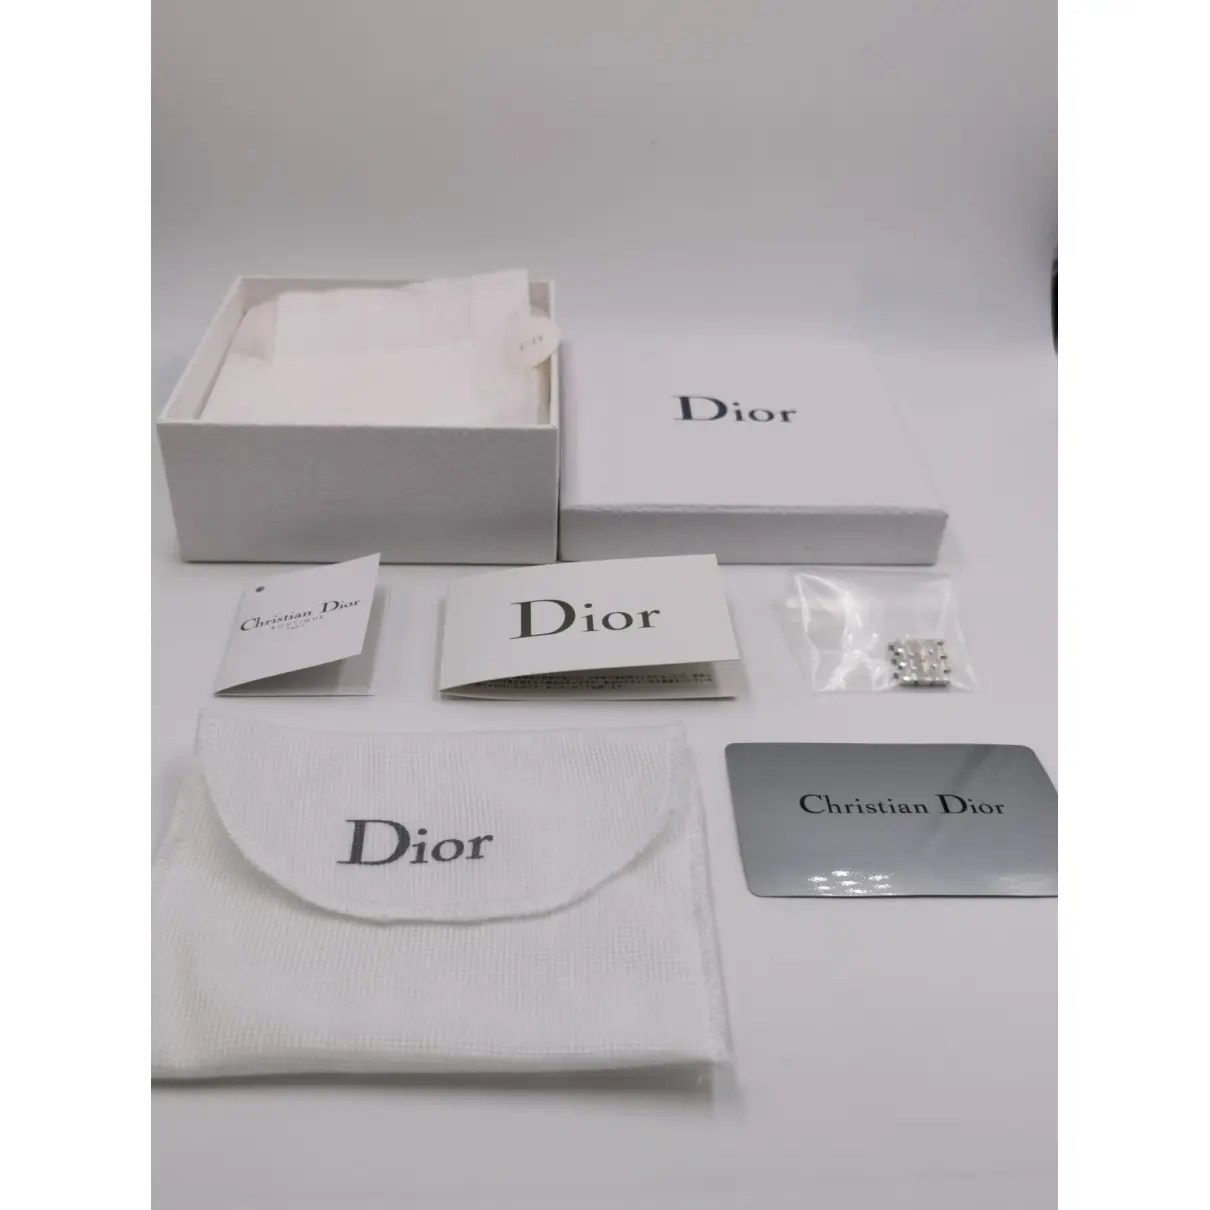 Buy Dior Watch online